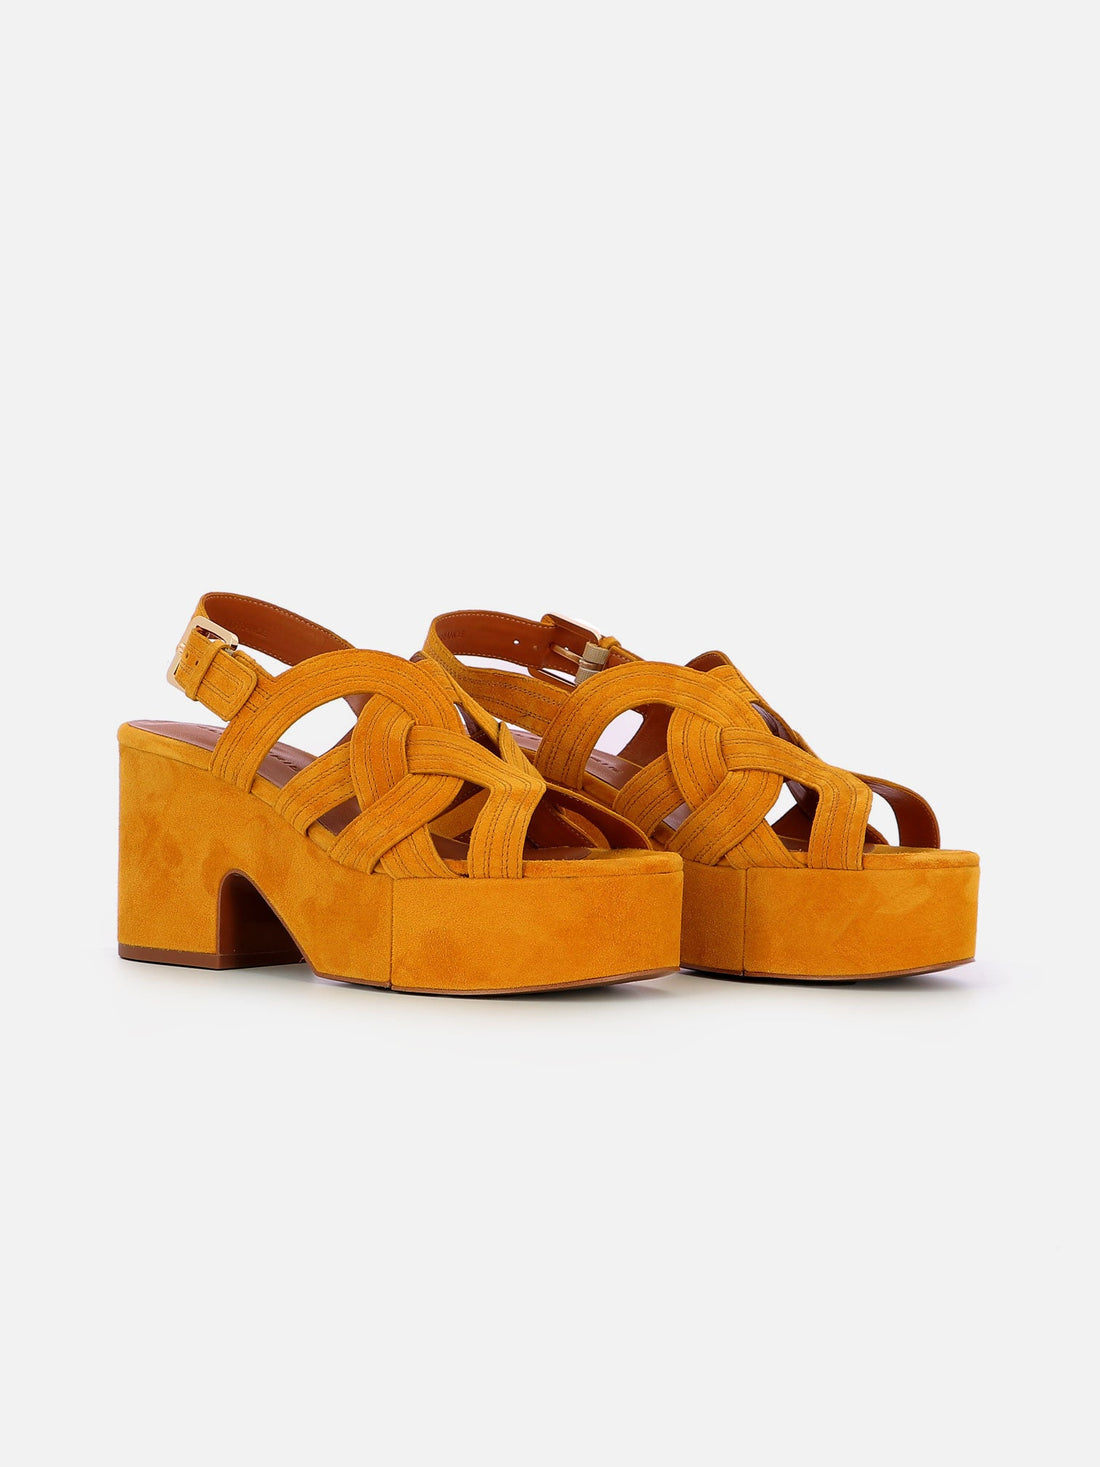 SANDALS - CHOU sandals, mango suede goatskin - 3606063971485 - Clergerie Paris - Europe